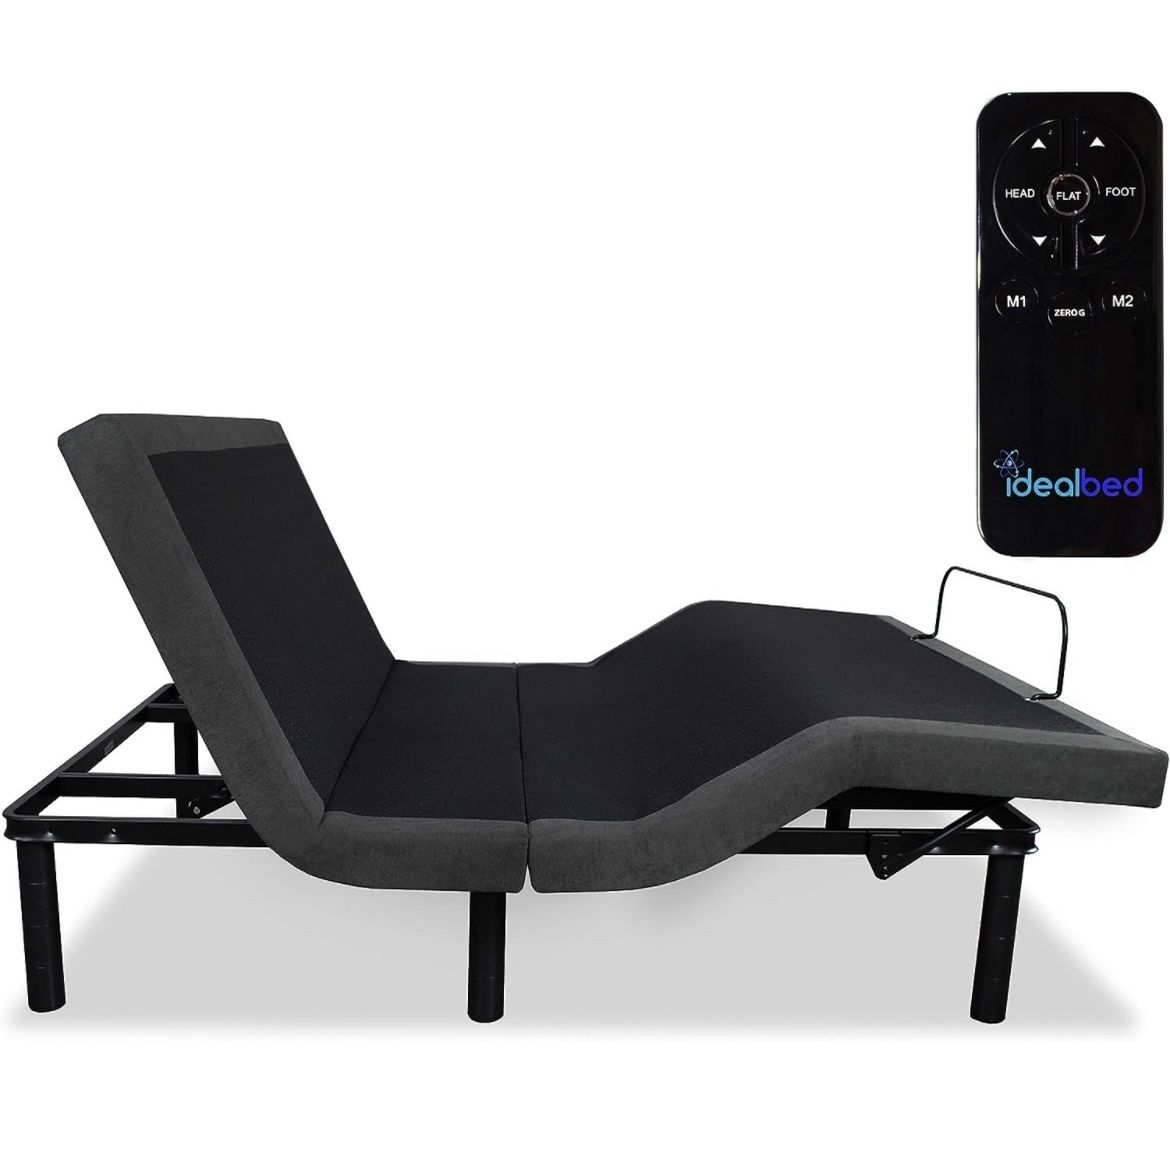 0-00 iDealBed 3i Custom Adjustable Bed Base, Wireless, Zero Gravity